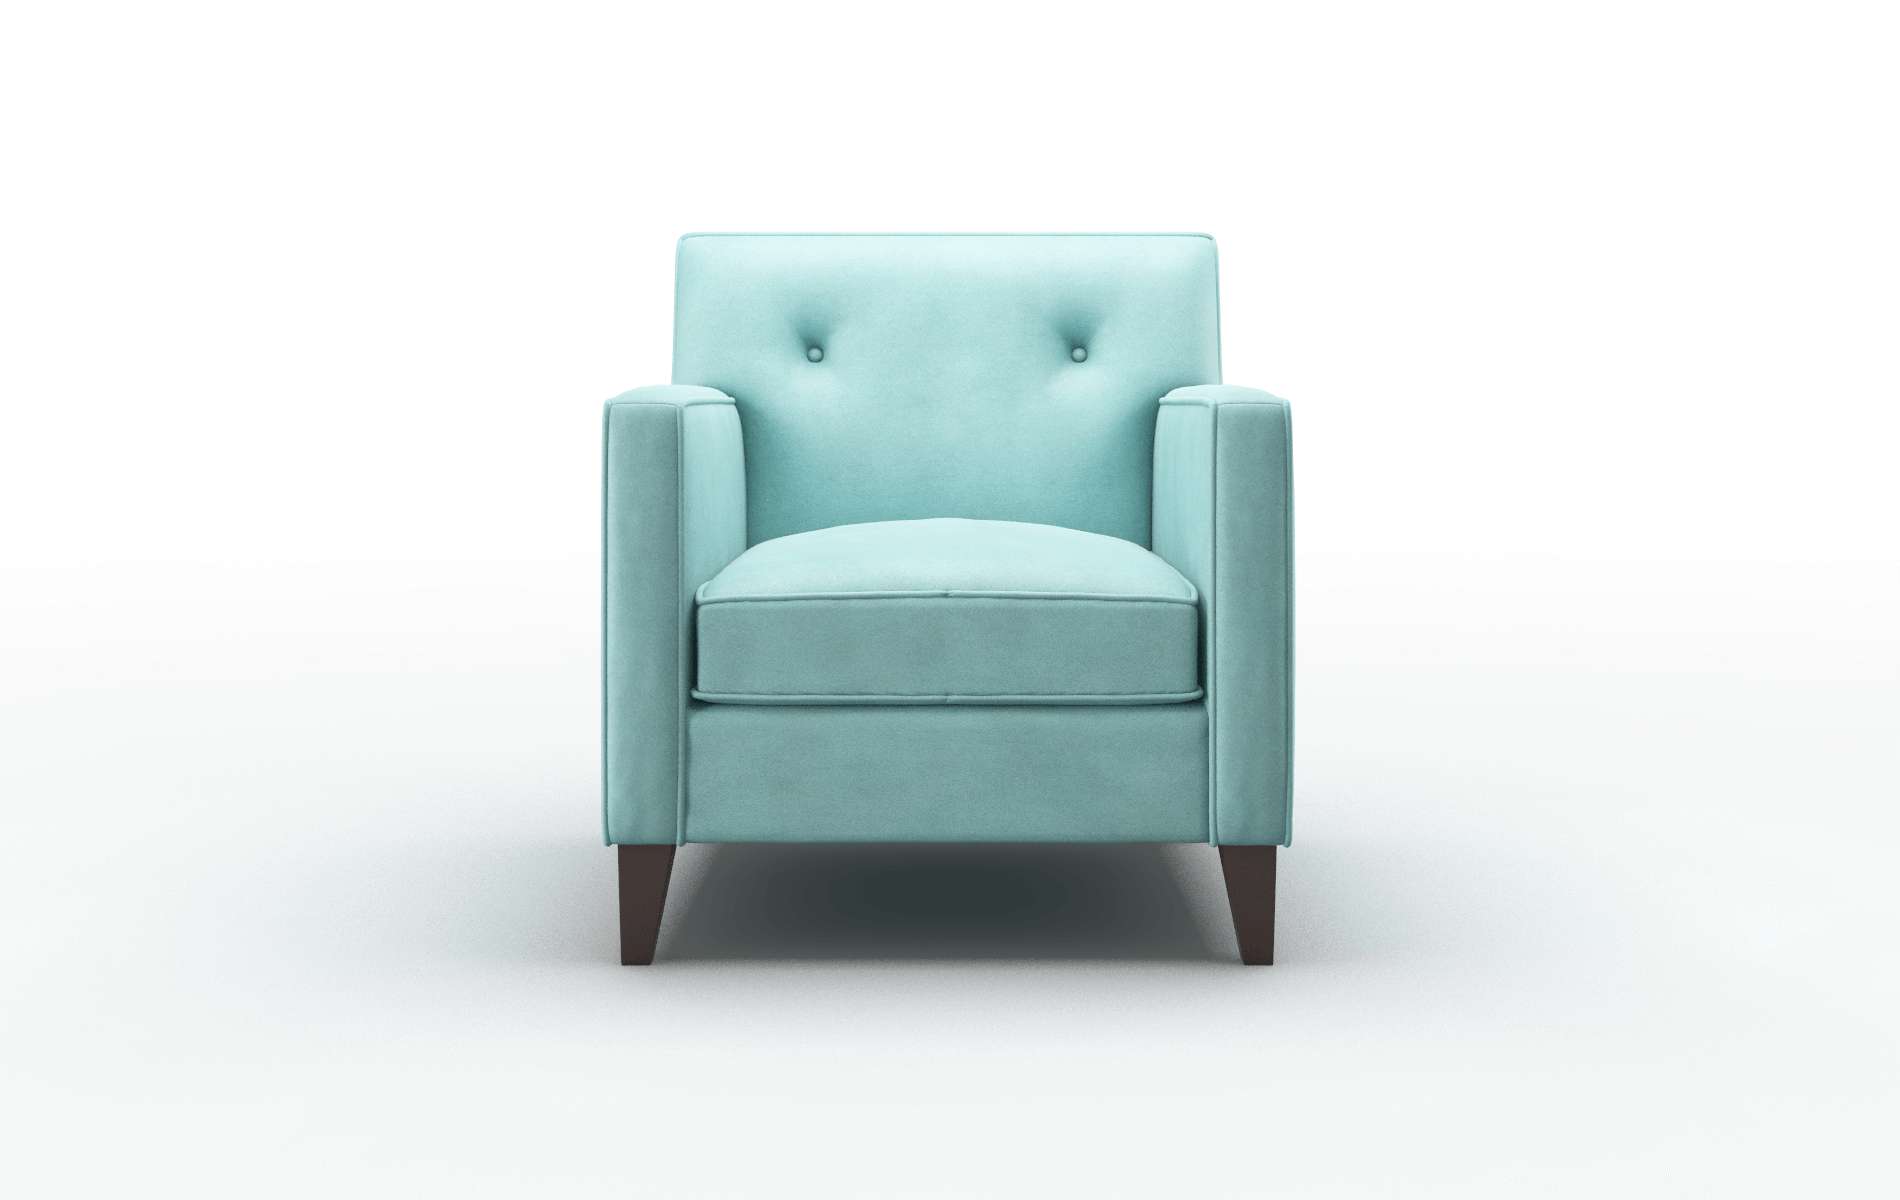 Harper Curious Turquoise chair espresso legs